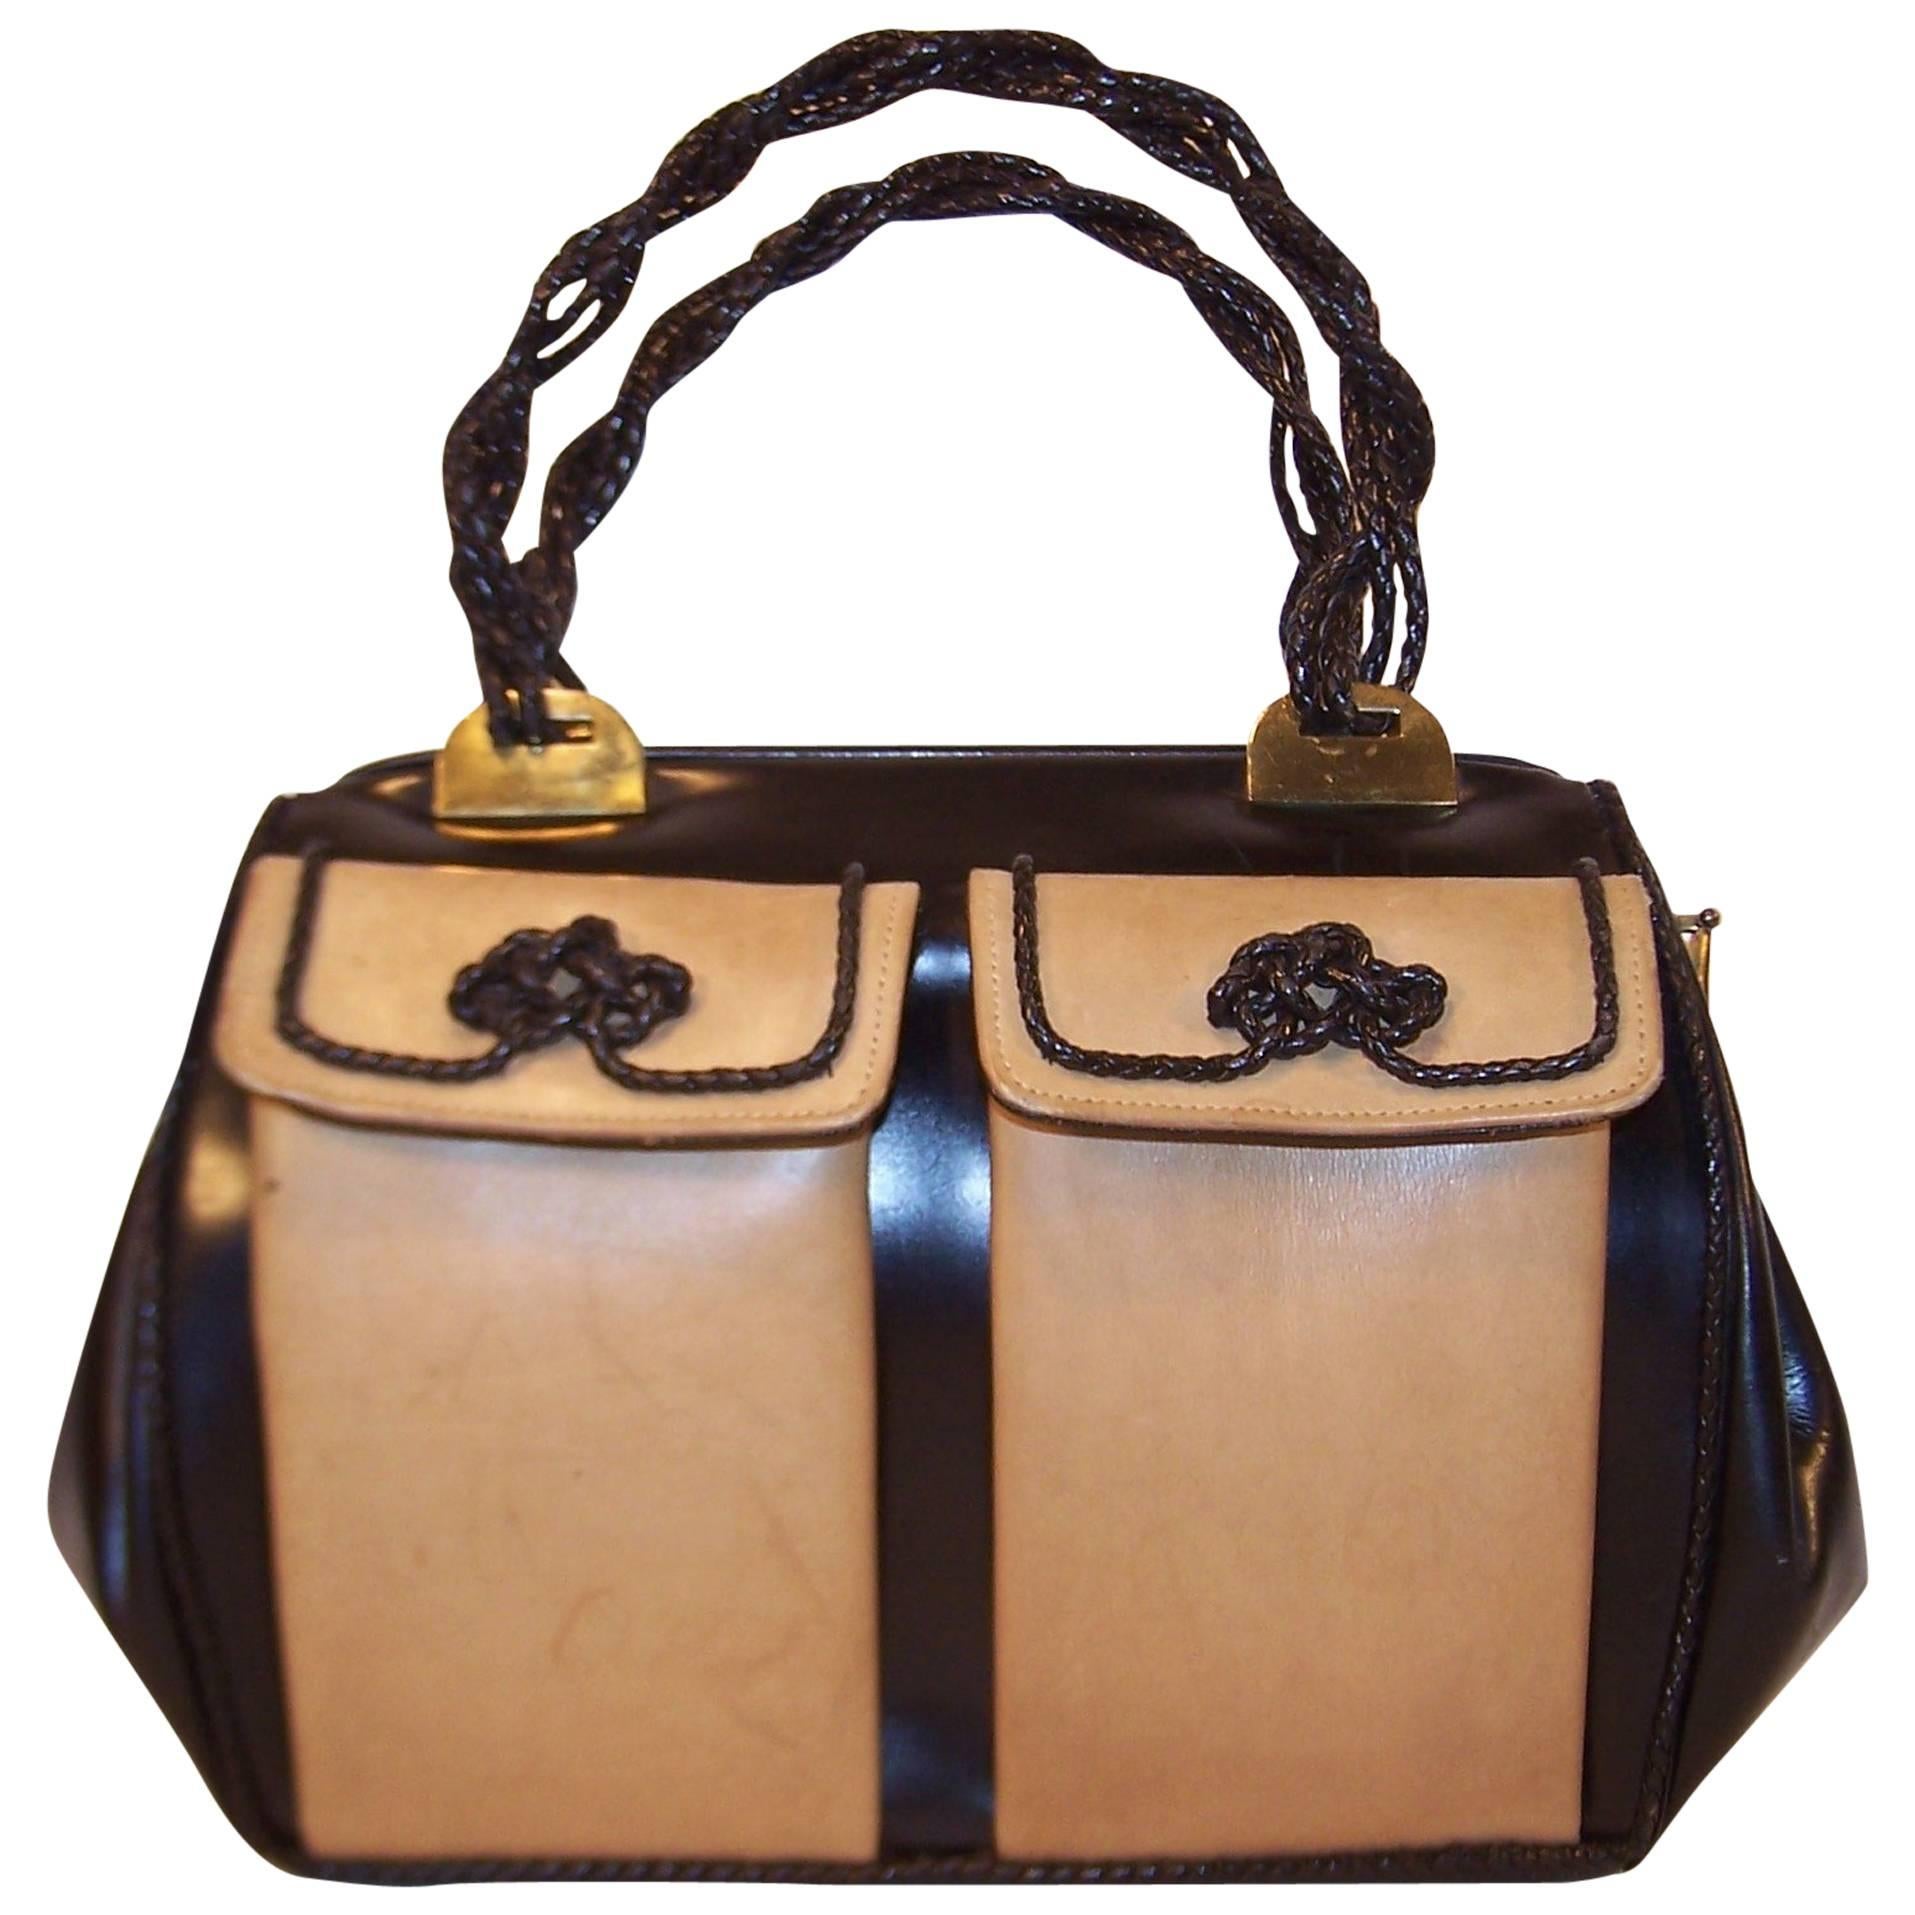 C.1960 Roberta di Camerino Full Leather Two Tone Satchel Handbag